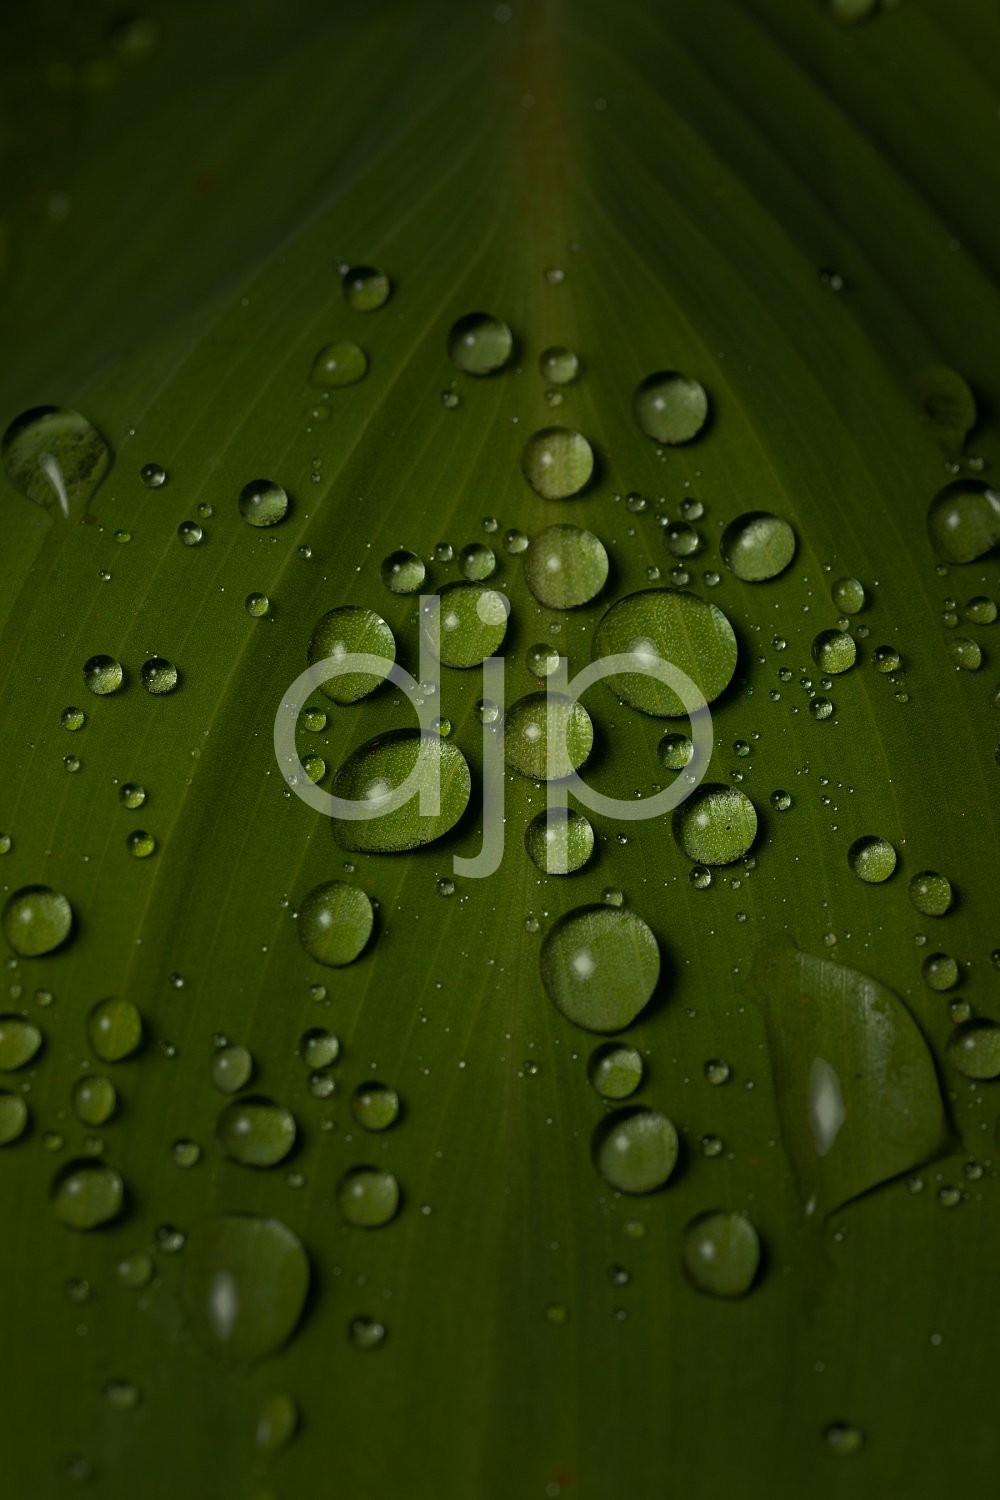 Sugar Land, djonesphoto, droplets, excursions with djp, green, leaf, macro, personal, quarantine, D Jones Photography